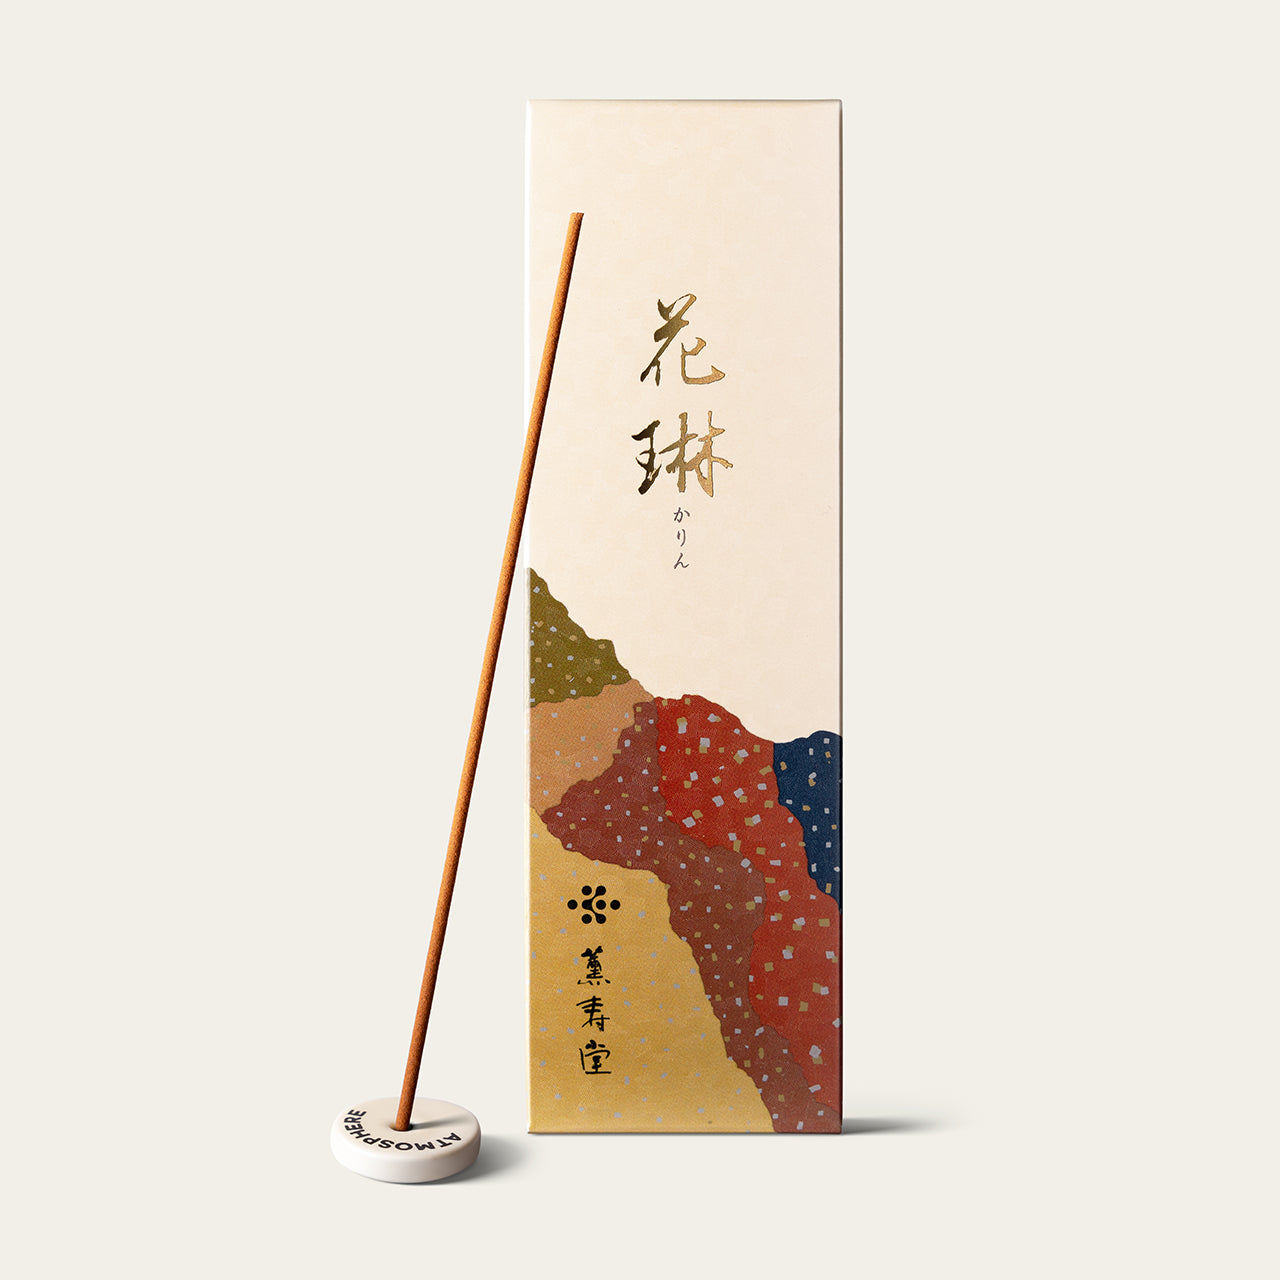 Kunjudo Karin Japanese incense sticks (80 sticks) with Atmosphere ceramic incense holder